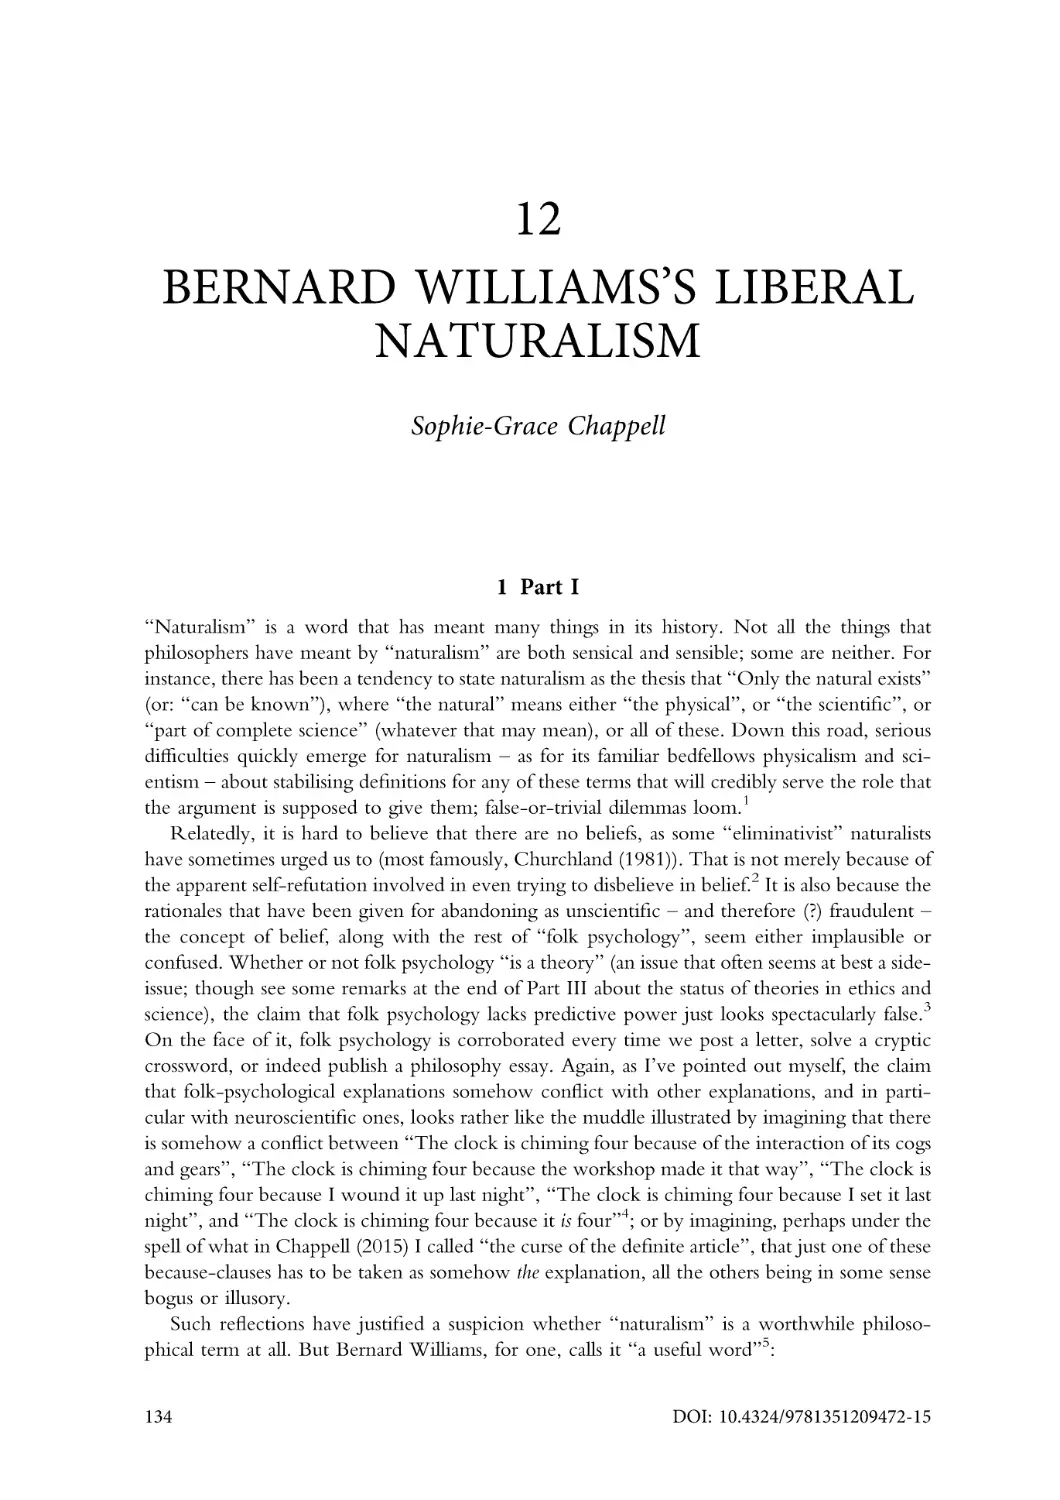 12. Bernard Williams's liberal naturalism
1. Part I